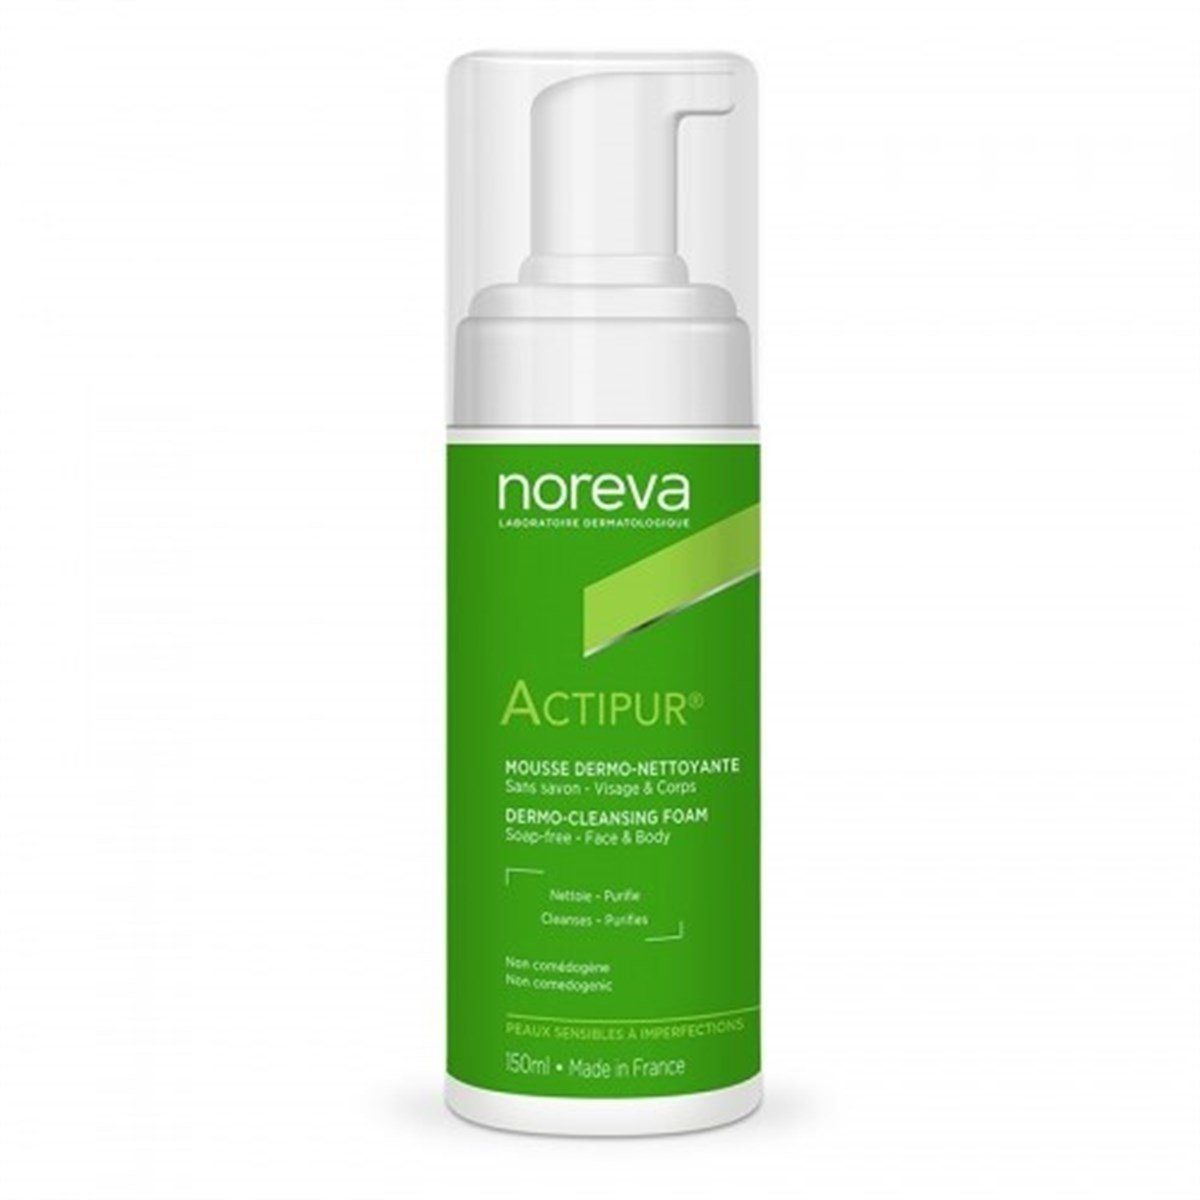 Noreva Actipur Dermo-Cleansing Gel - Face and Body 150ml | Dermolist.com da  !